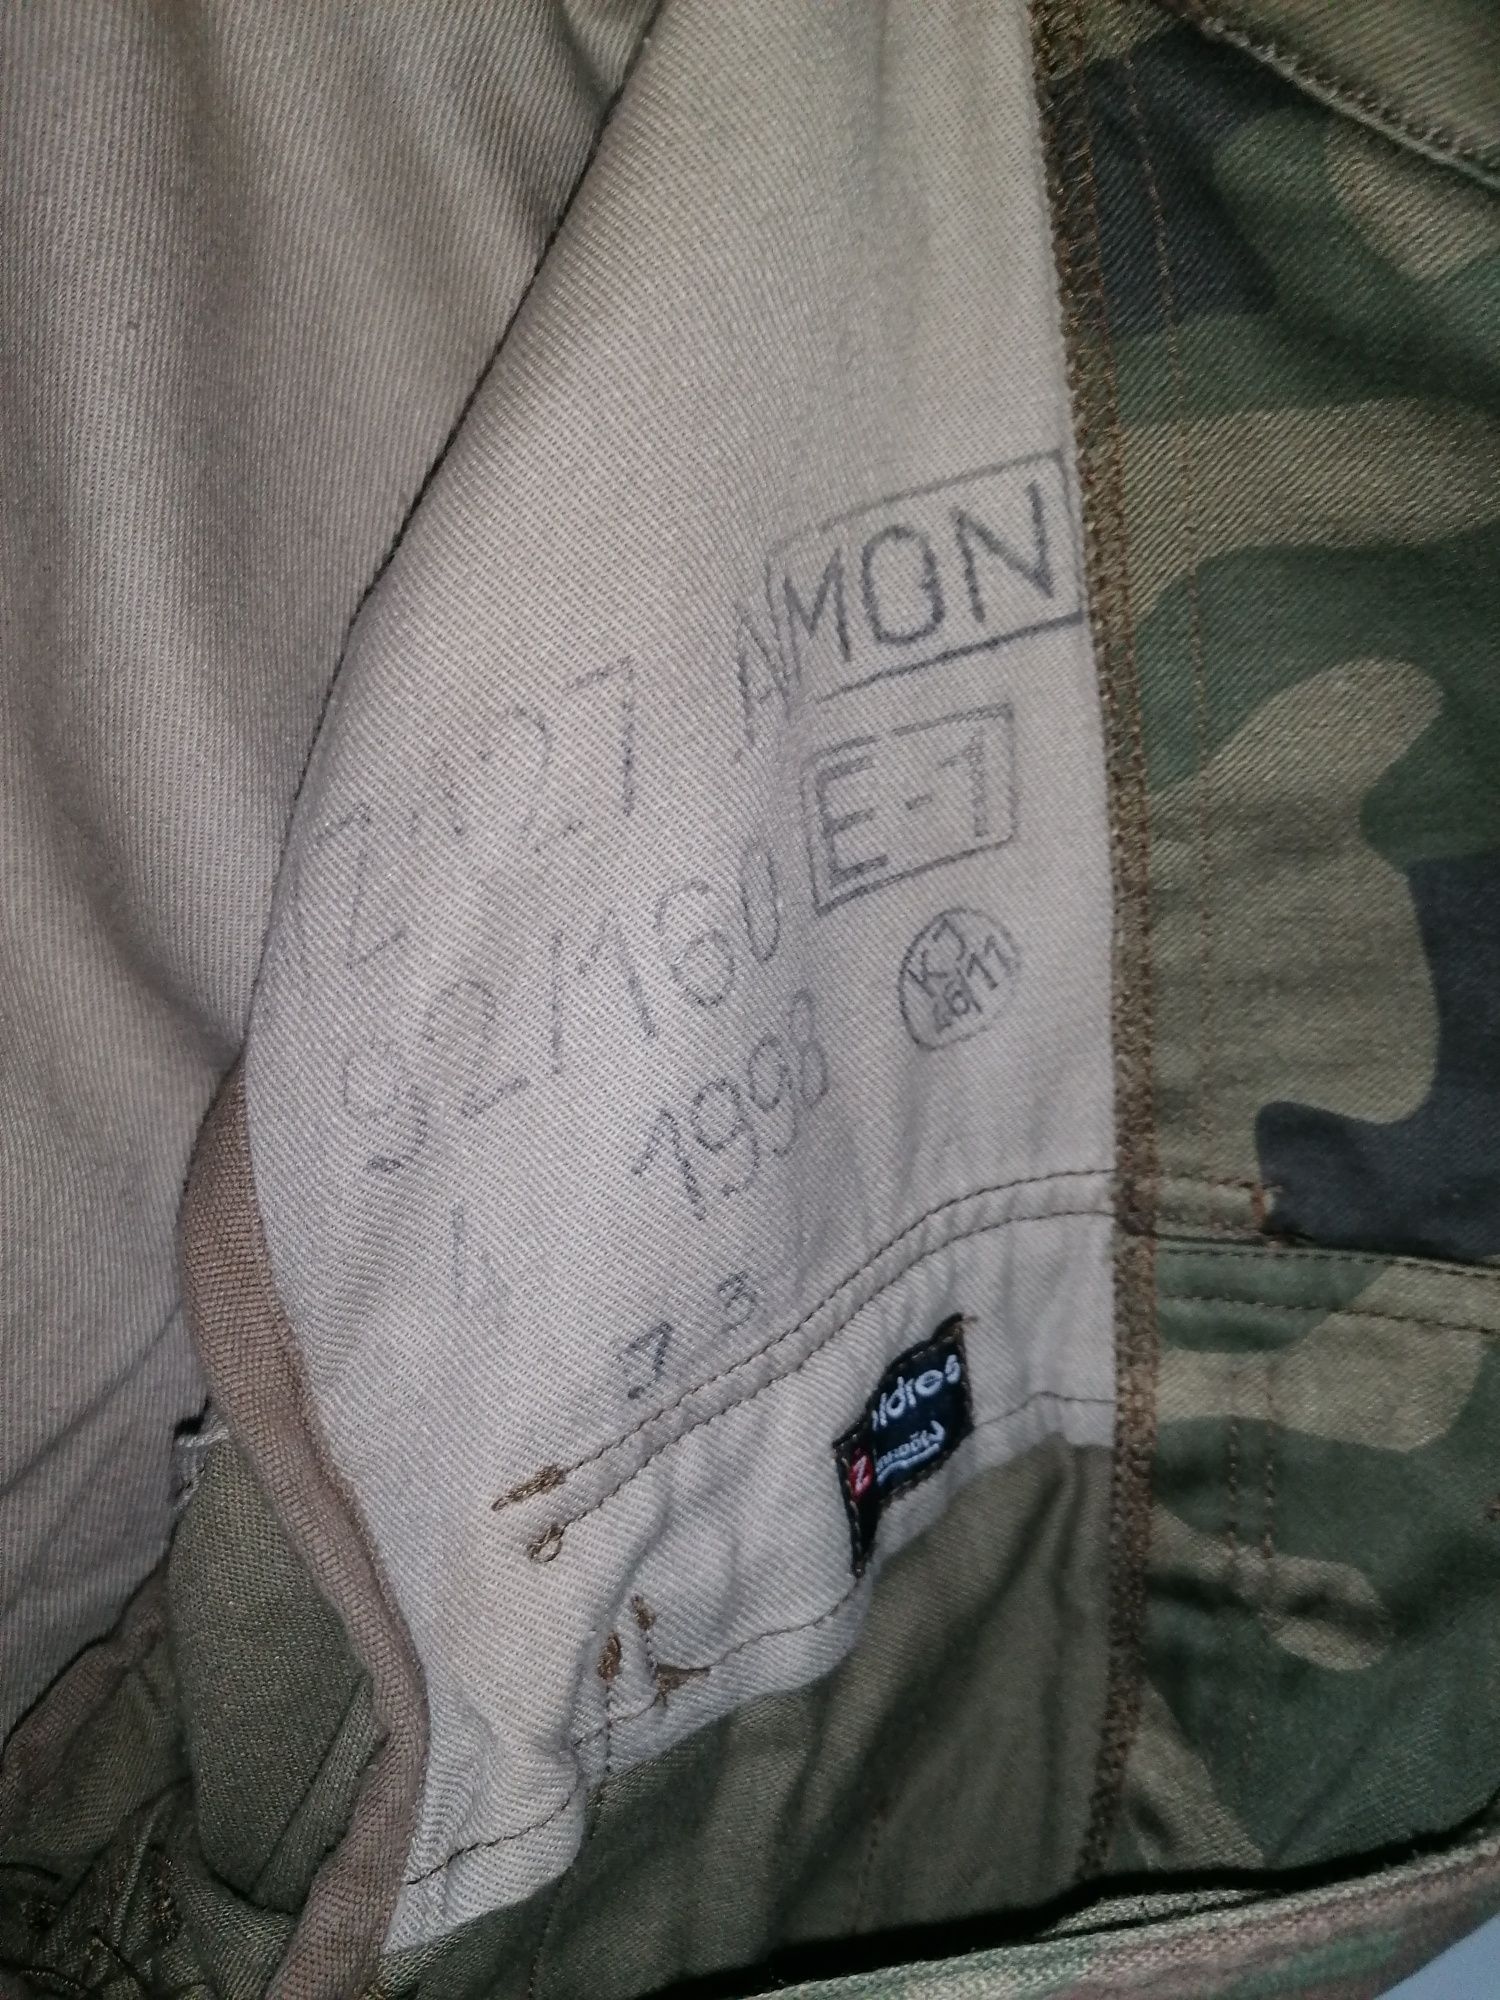 Bluza kurtka polowa mundur wz 93 127 MON